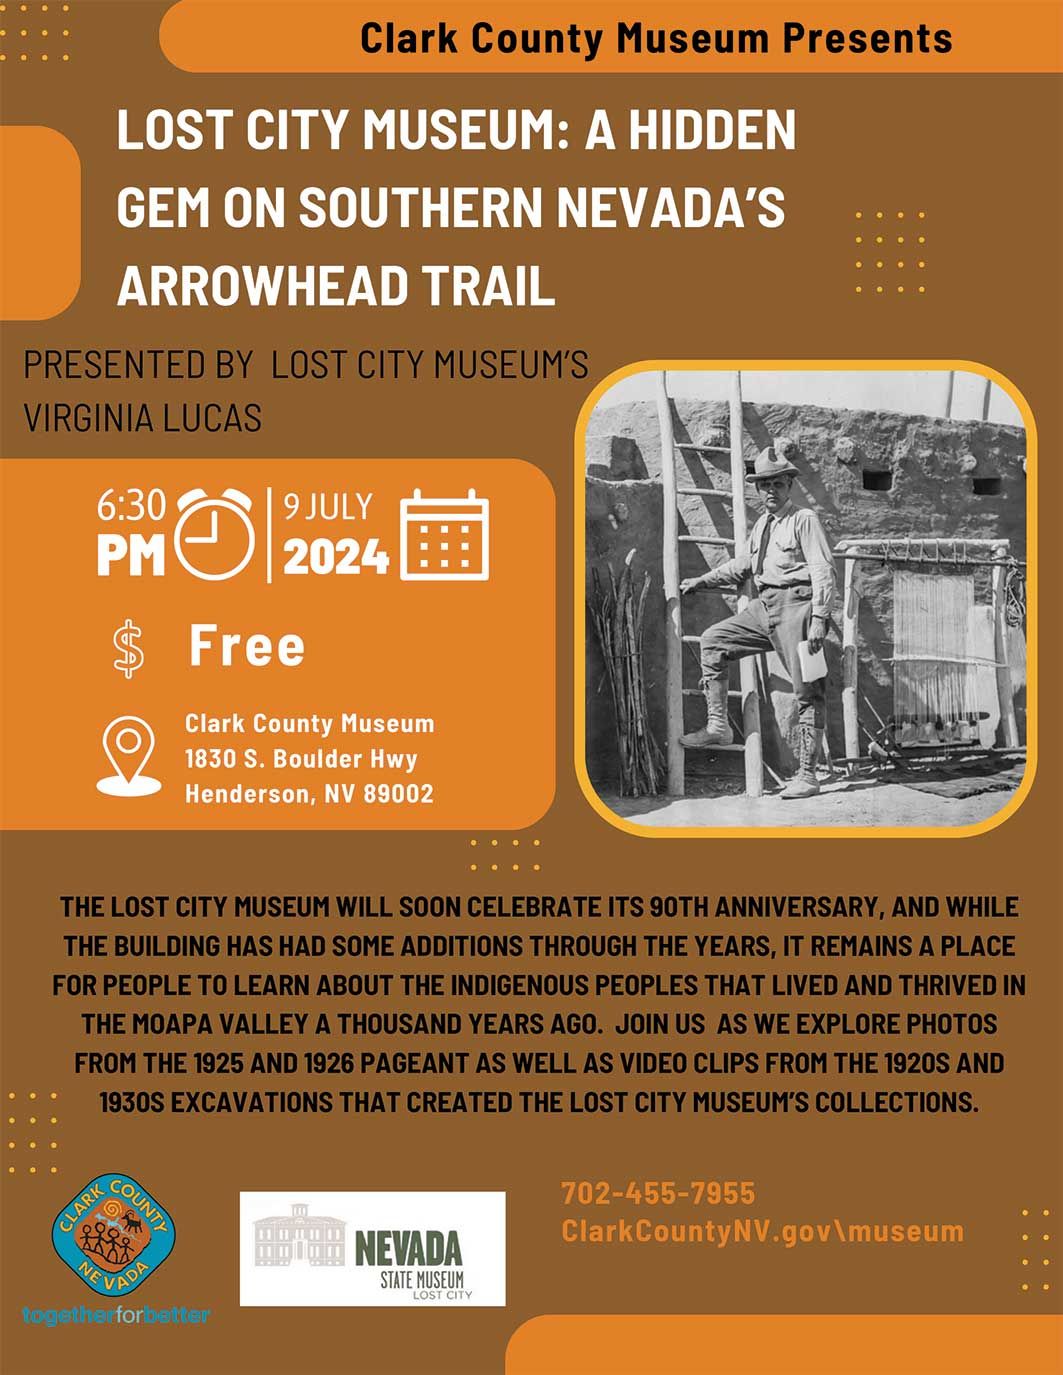 Lost City Museum: A Hidden Gem on Southern Nevada's Arrowhead Trail